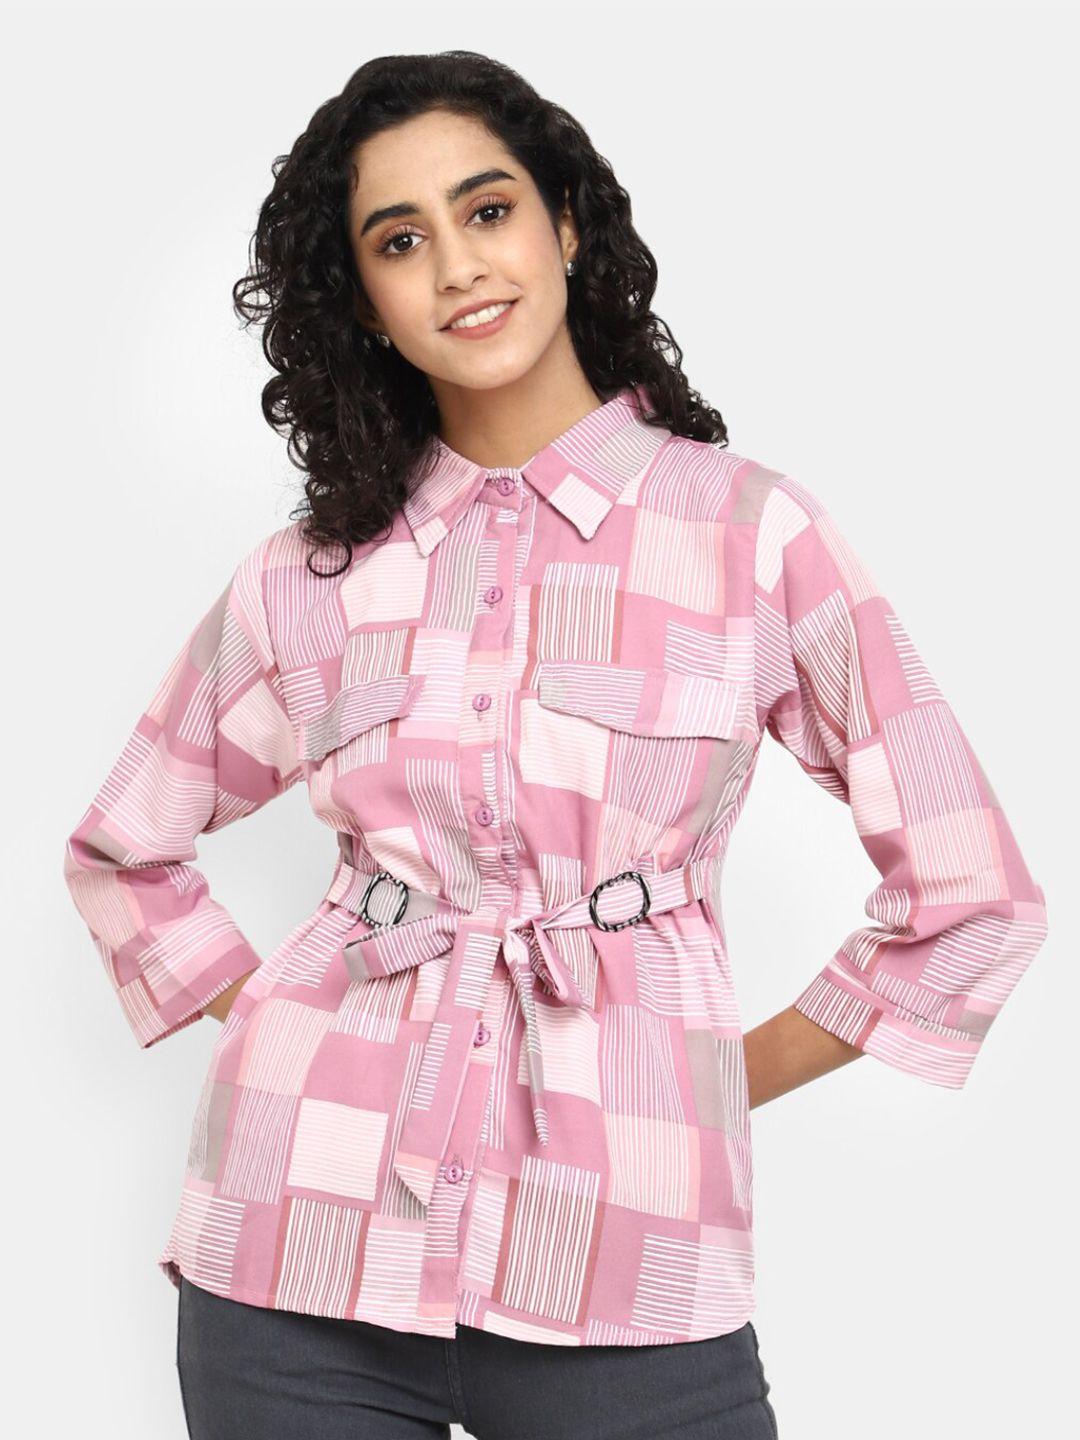 v-mart geometric printed cotton shirt style top